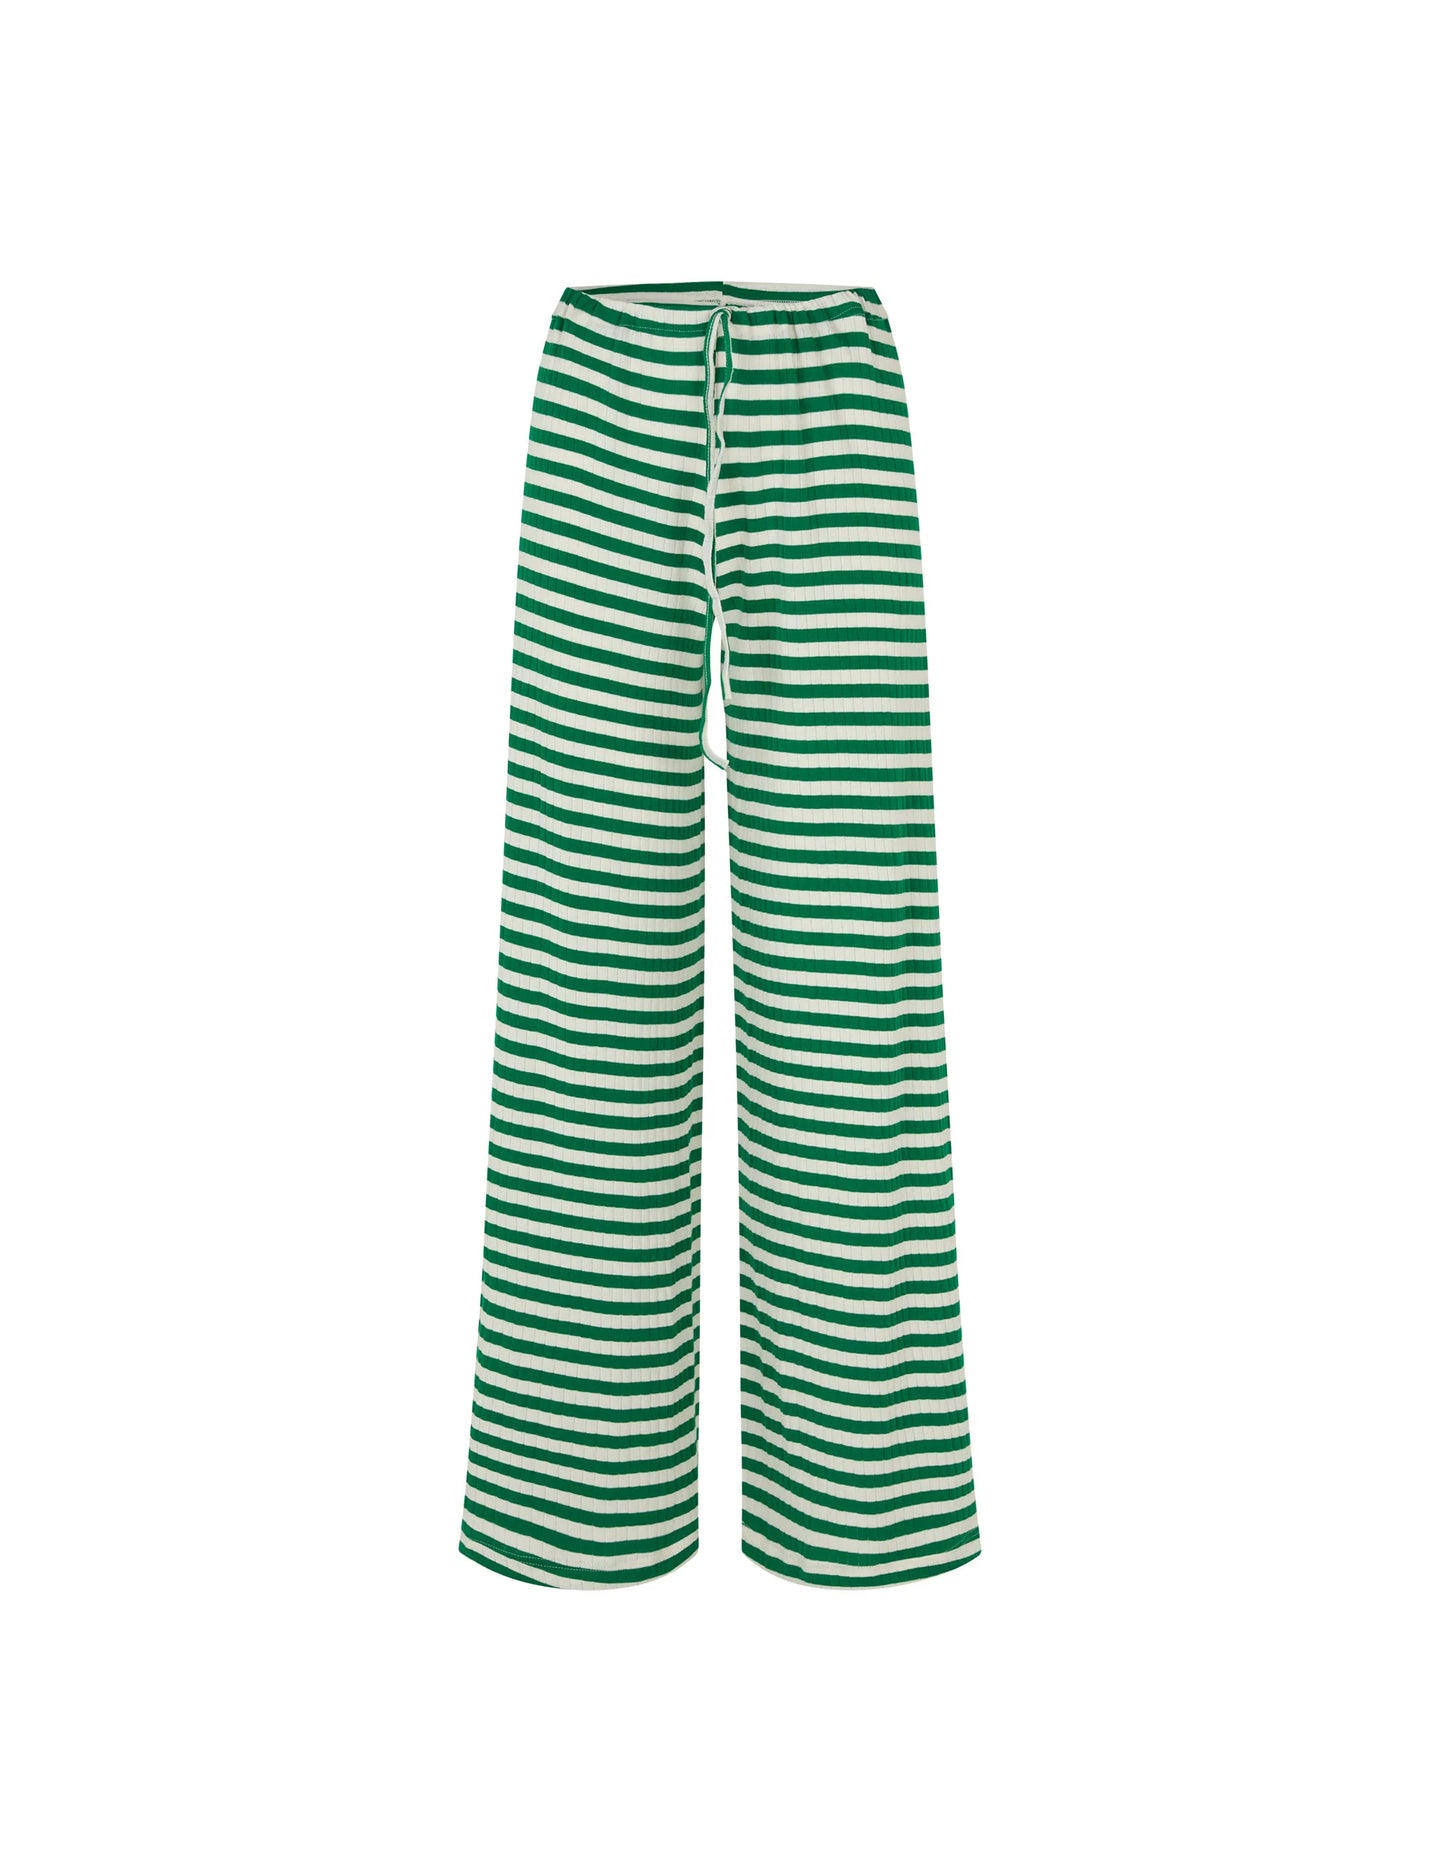 Nova pants green/ecru